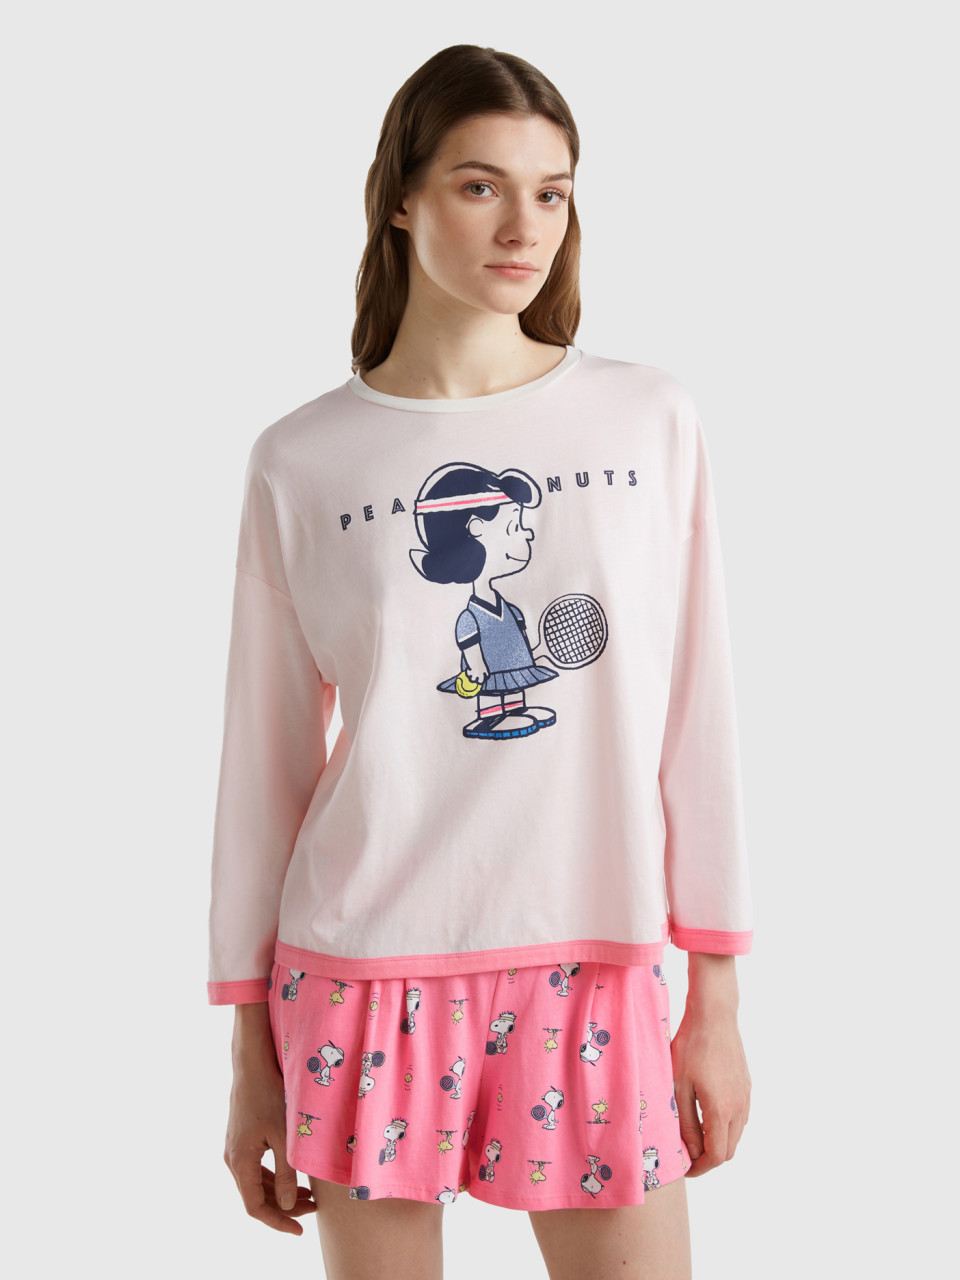 Benetton, Lucy ©peanuts T-shirt, Soft Pink, Women